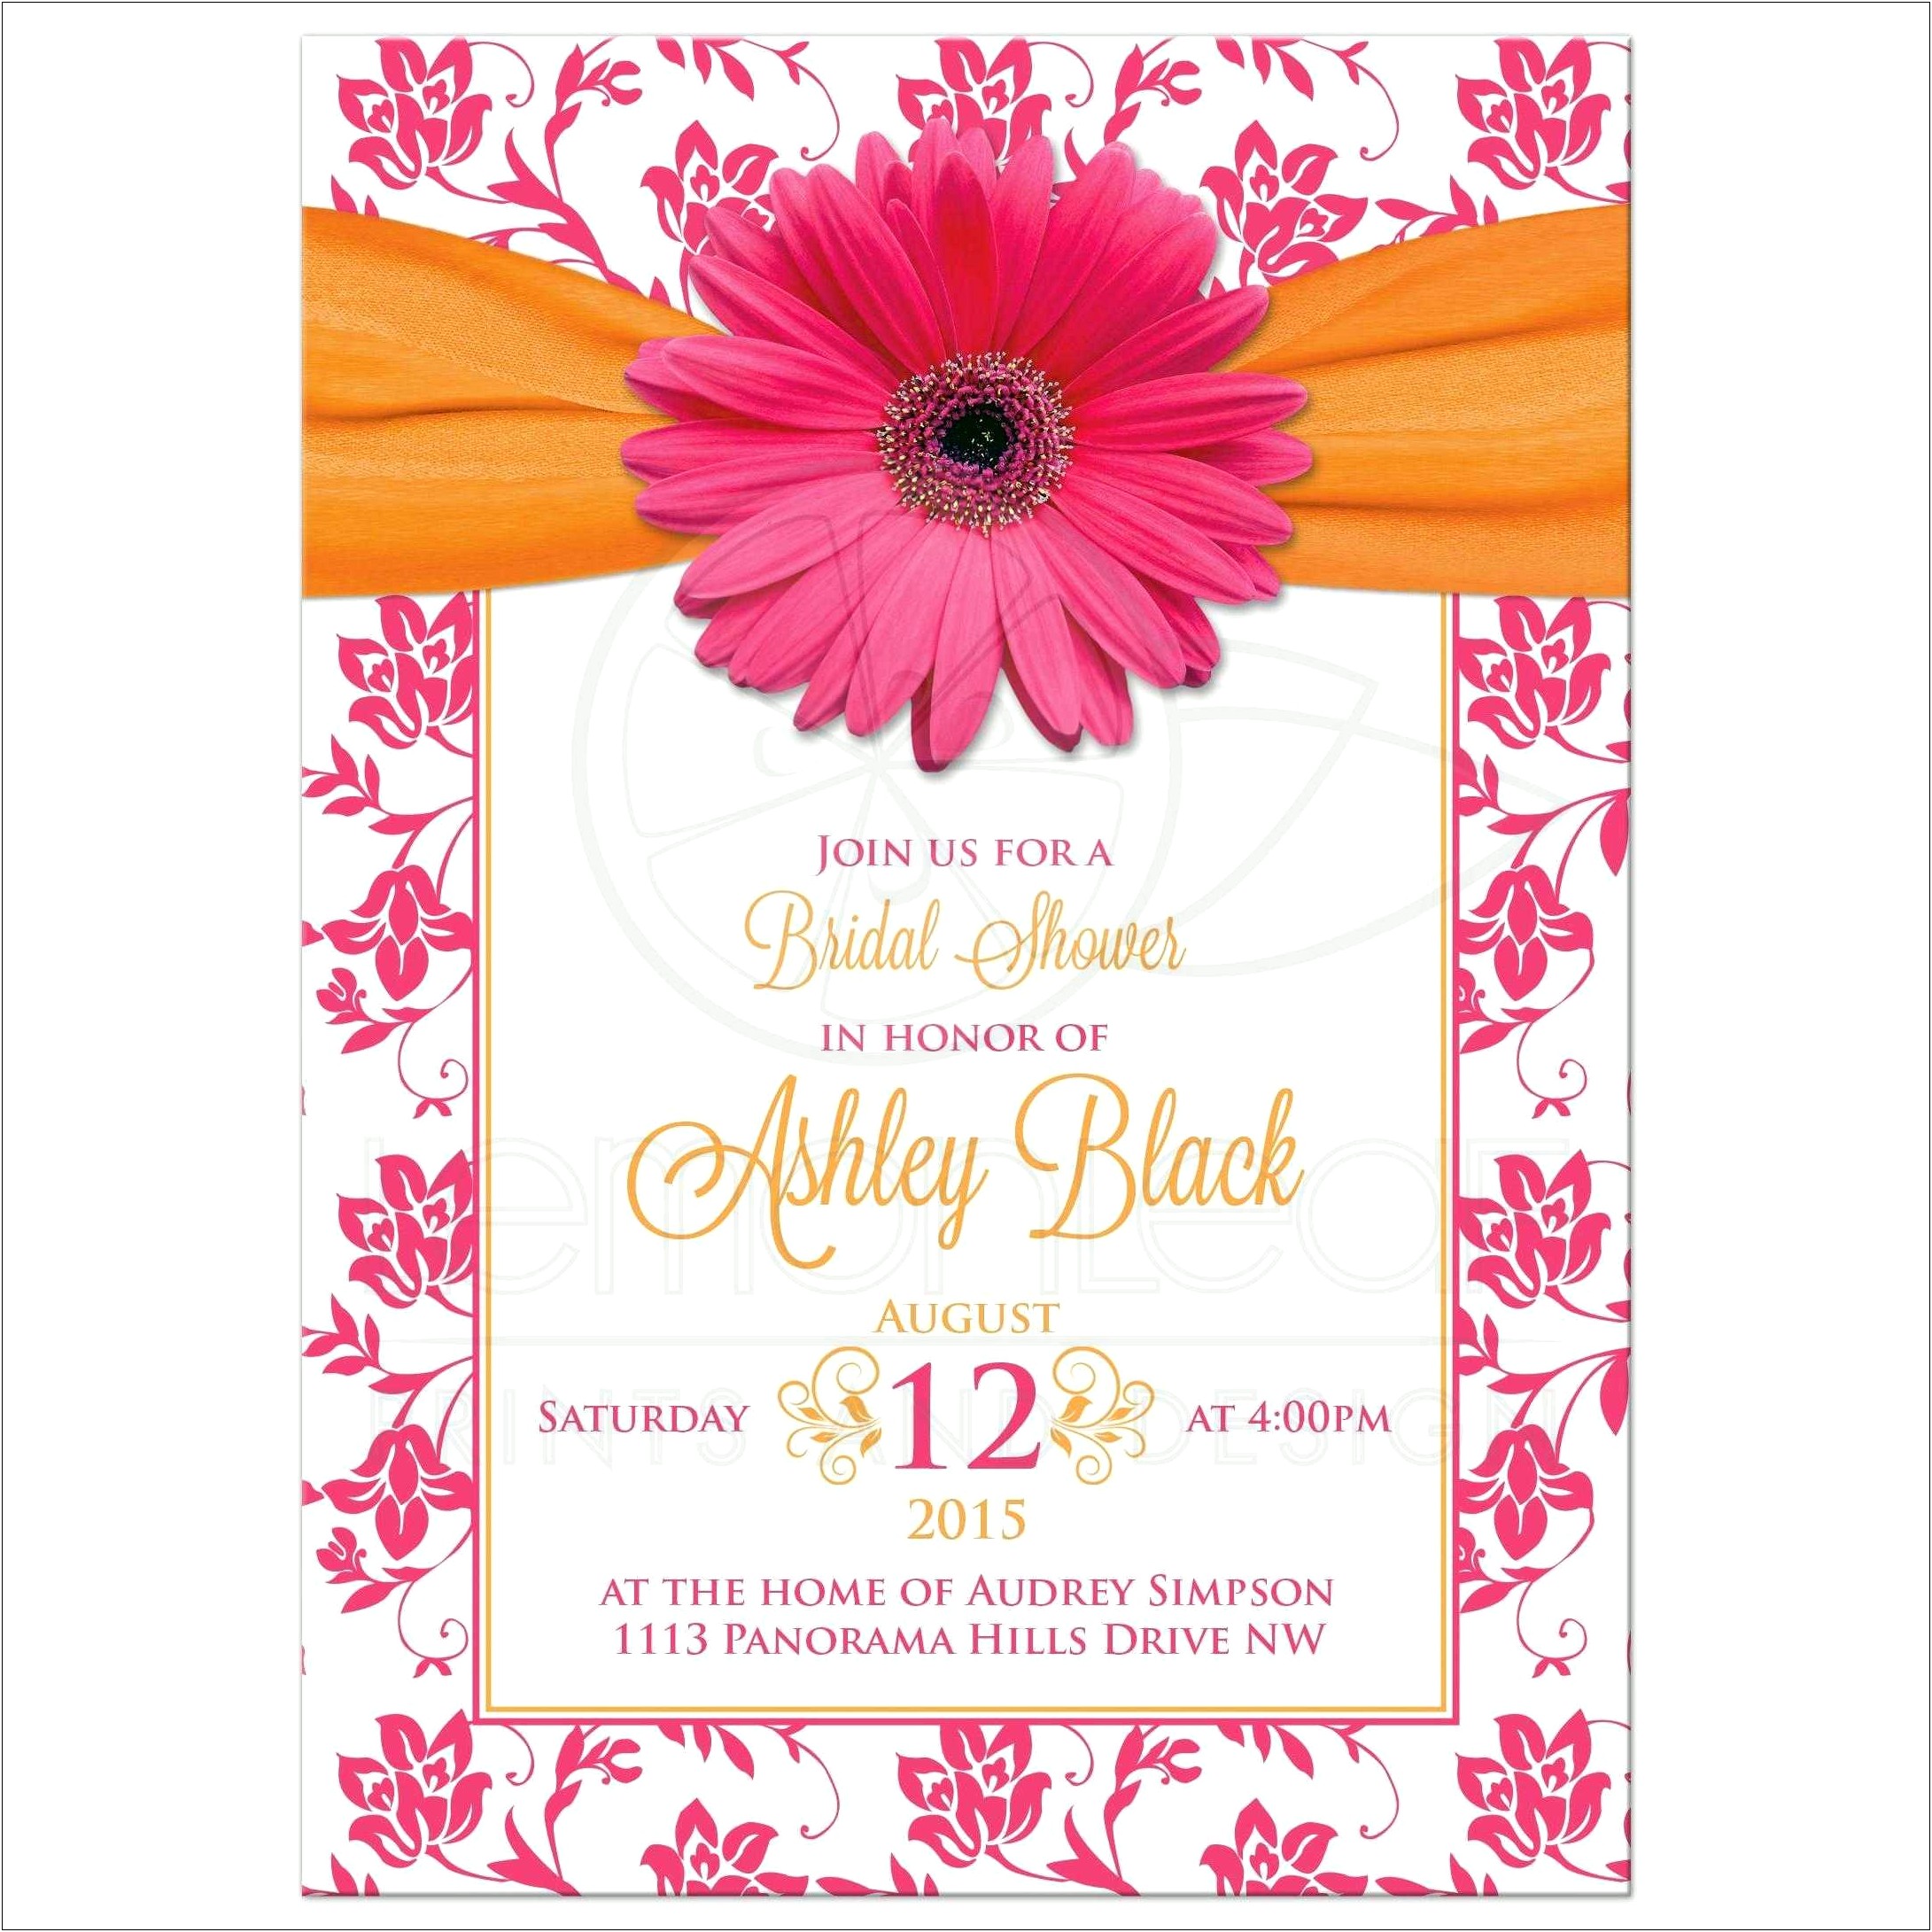 Hot Pink And Black Damask Wedding Invitations